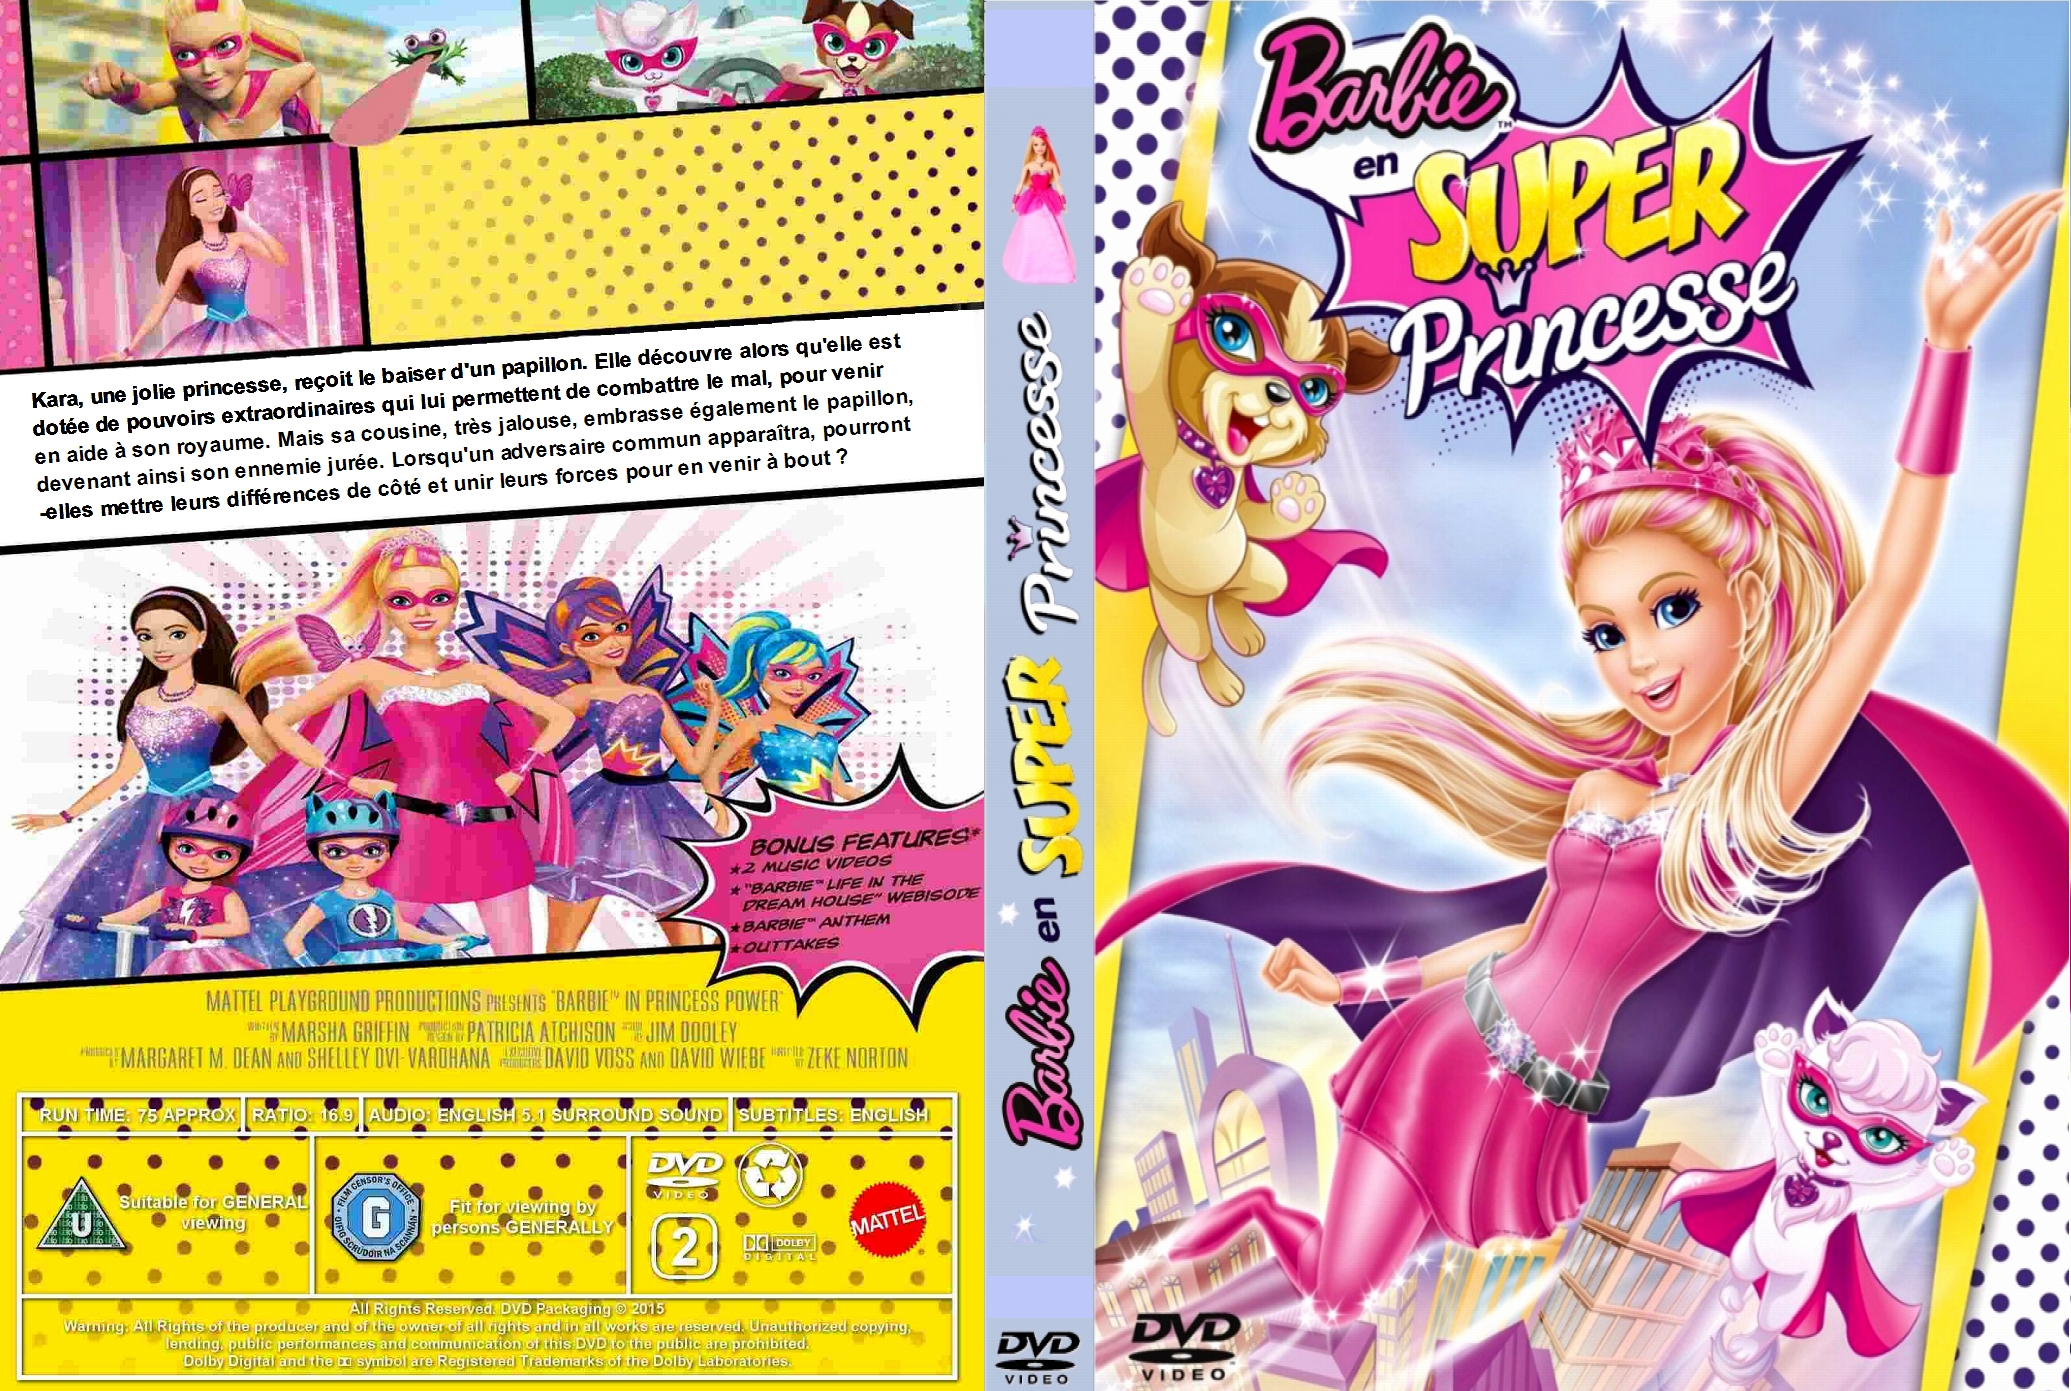 Jaquette DVD Barbie - En super princesse custom